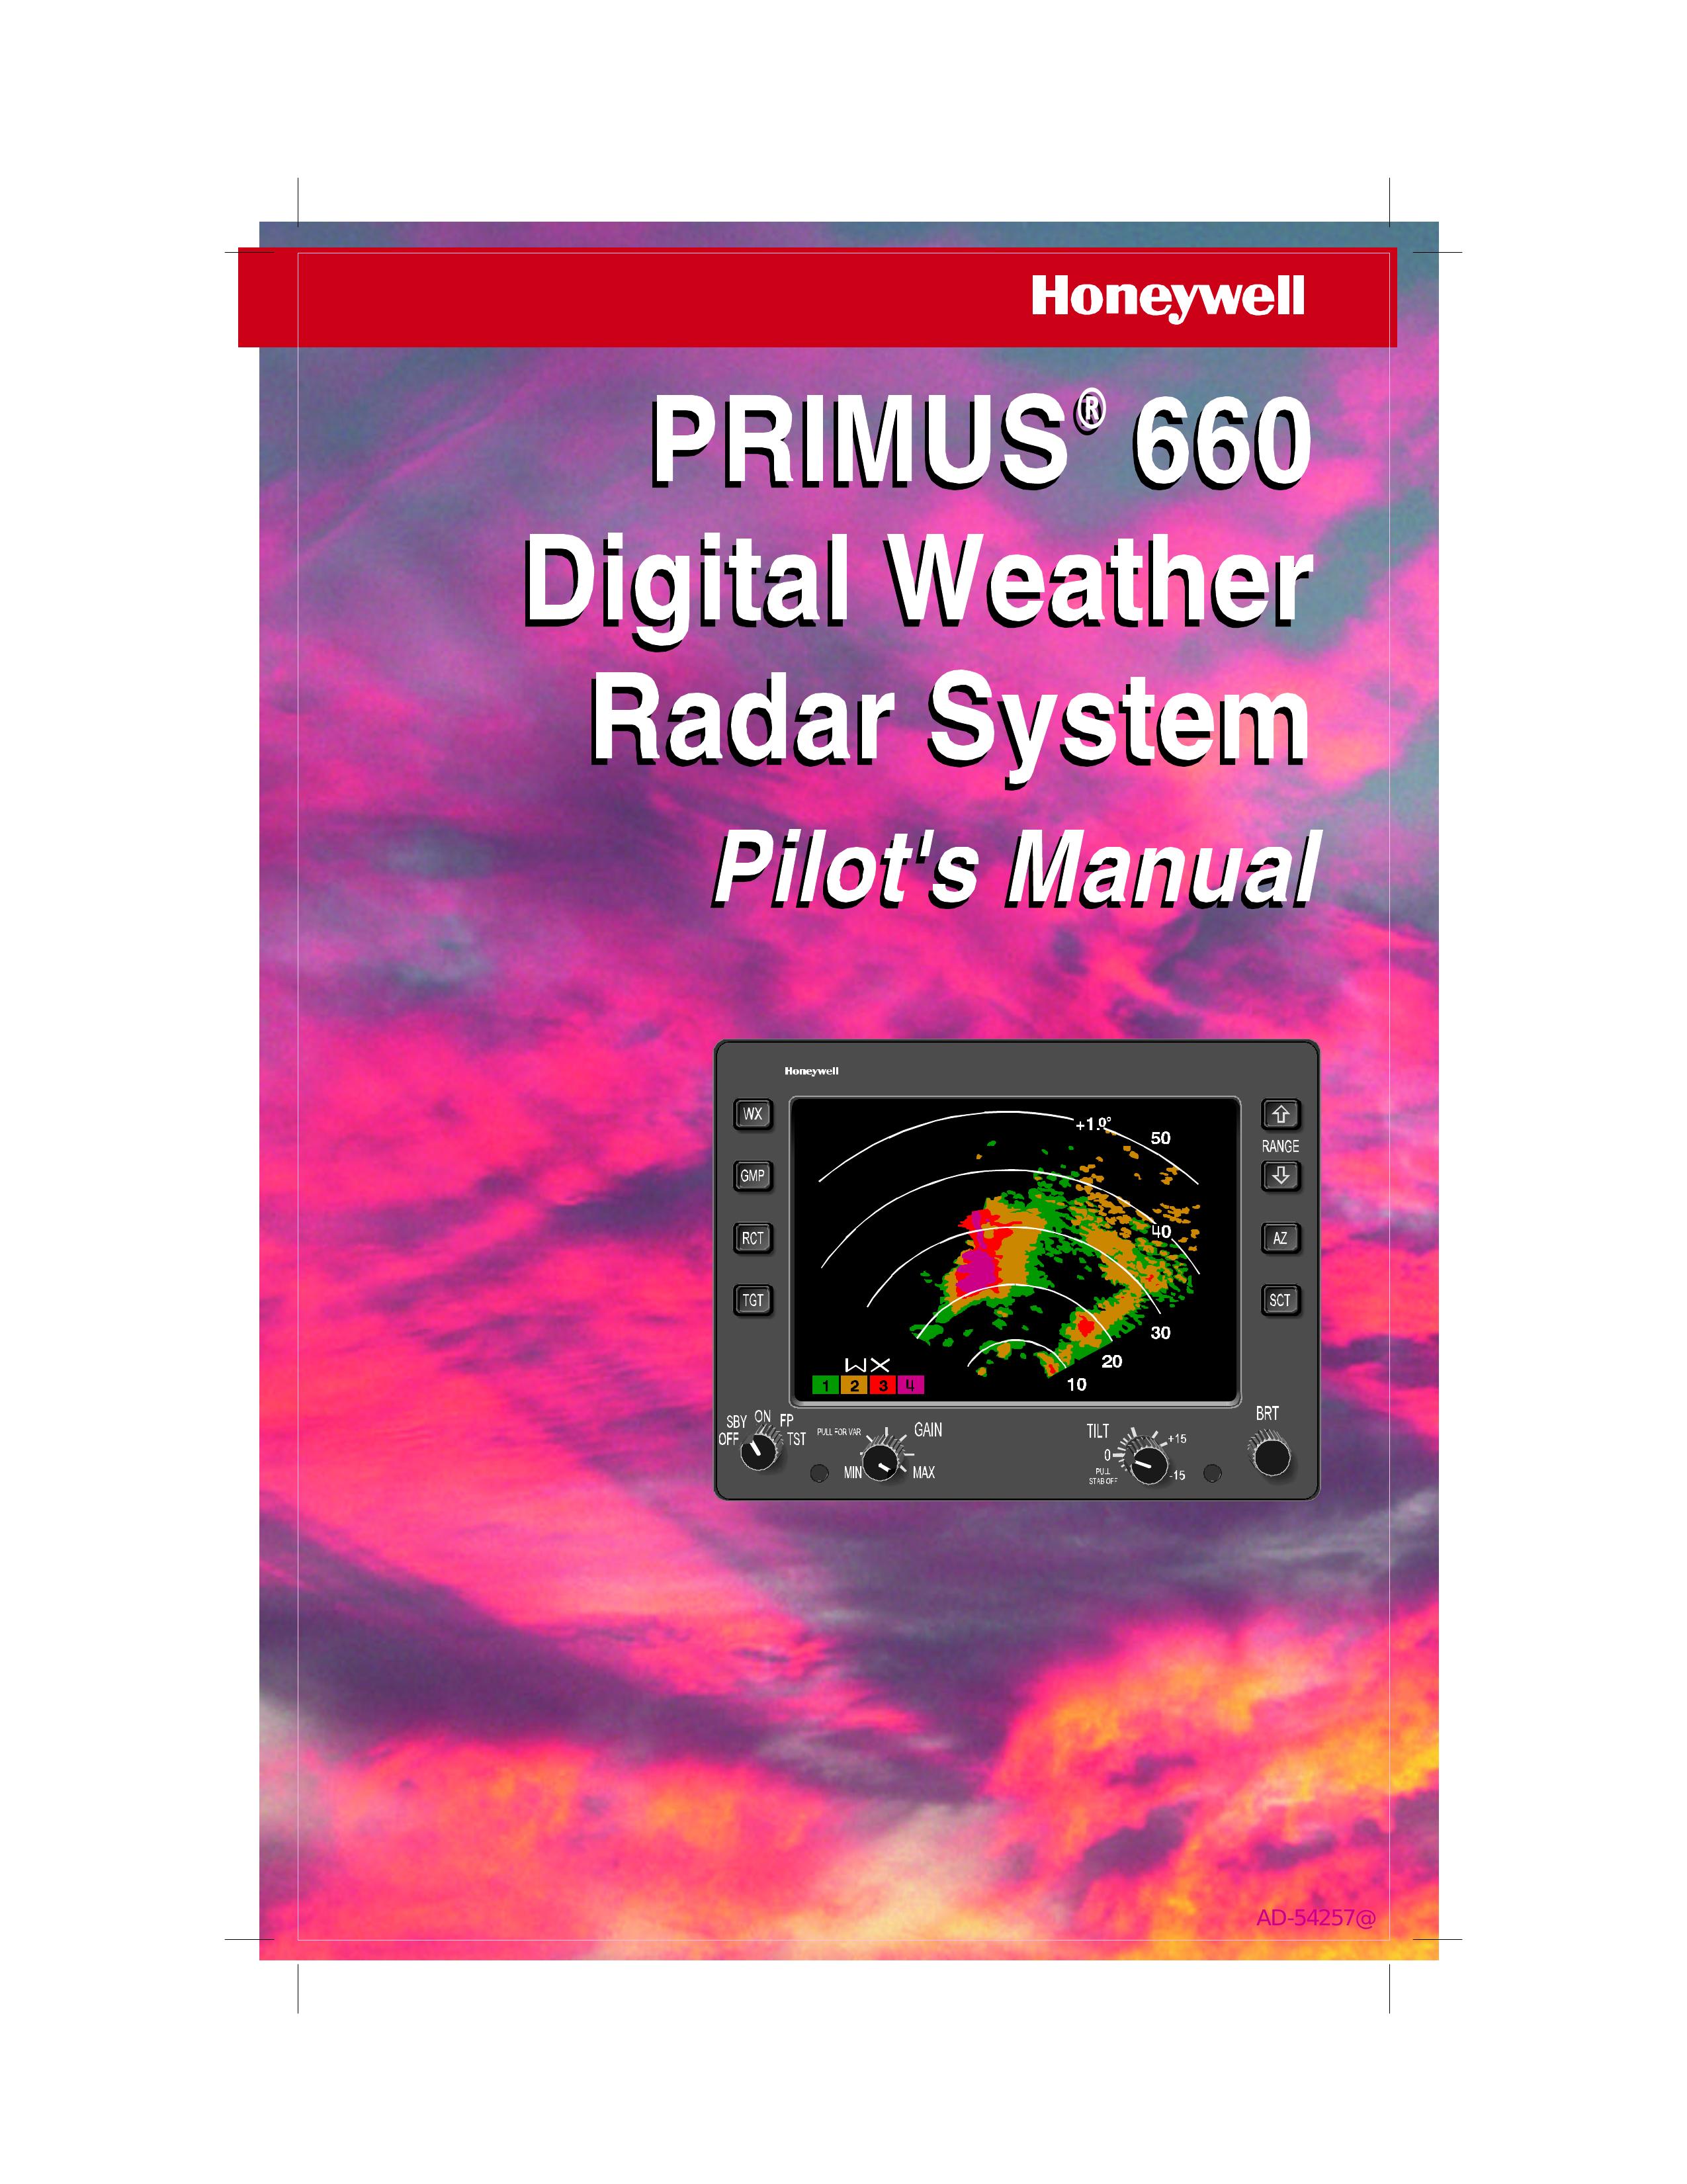 Honeywell AD-54257@ Weather Radio User Manual